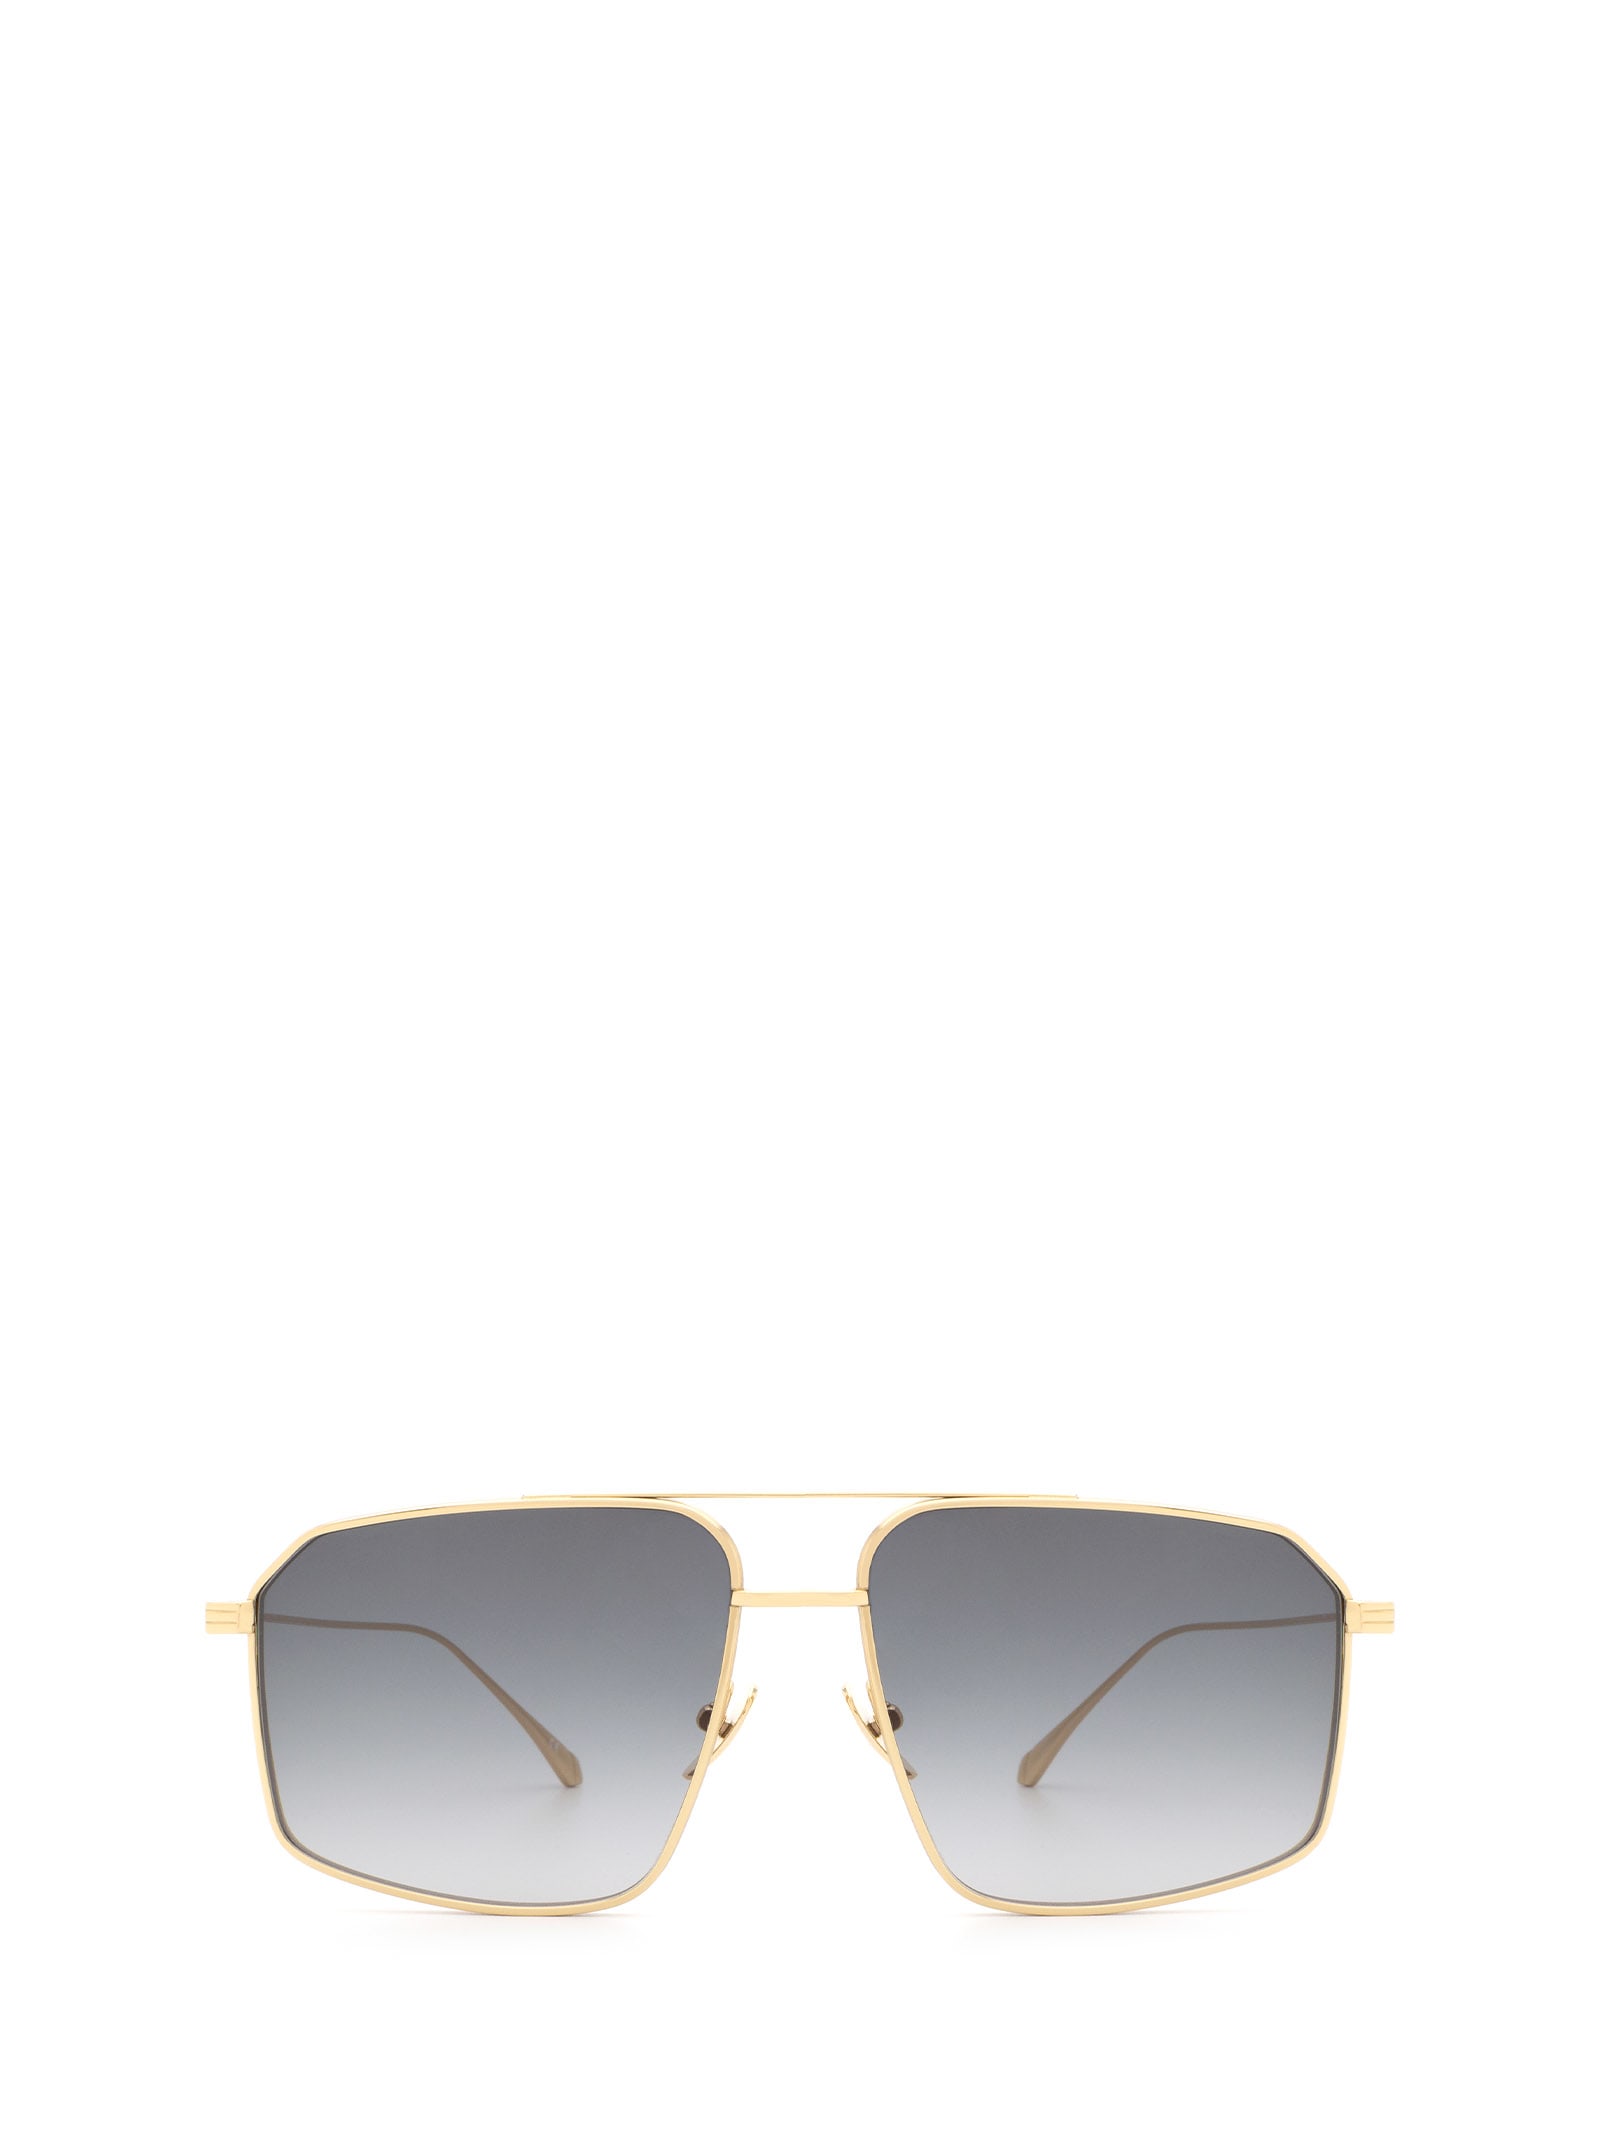 Kaleos Sisters Gold Sunglasses